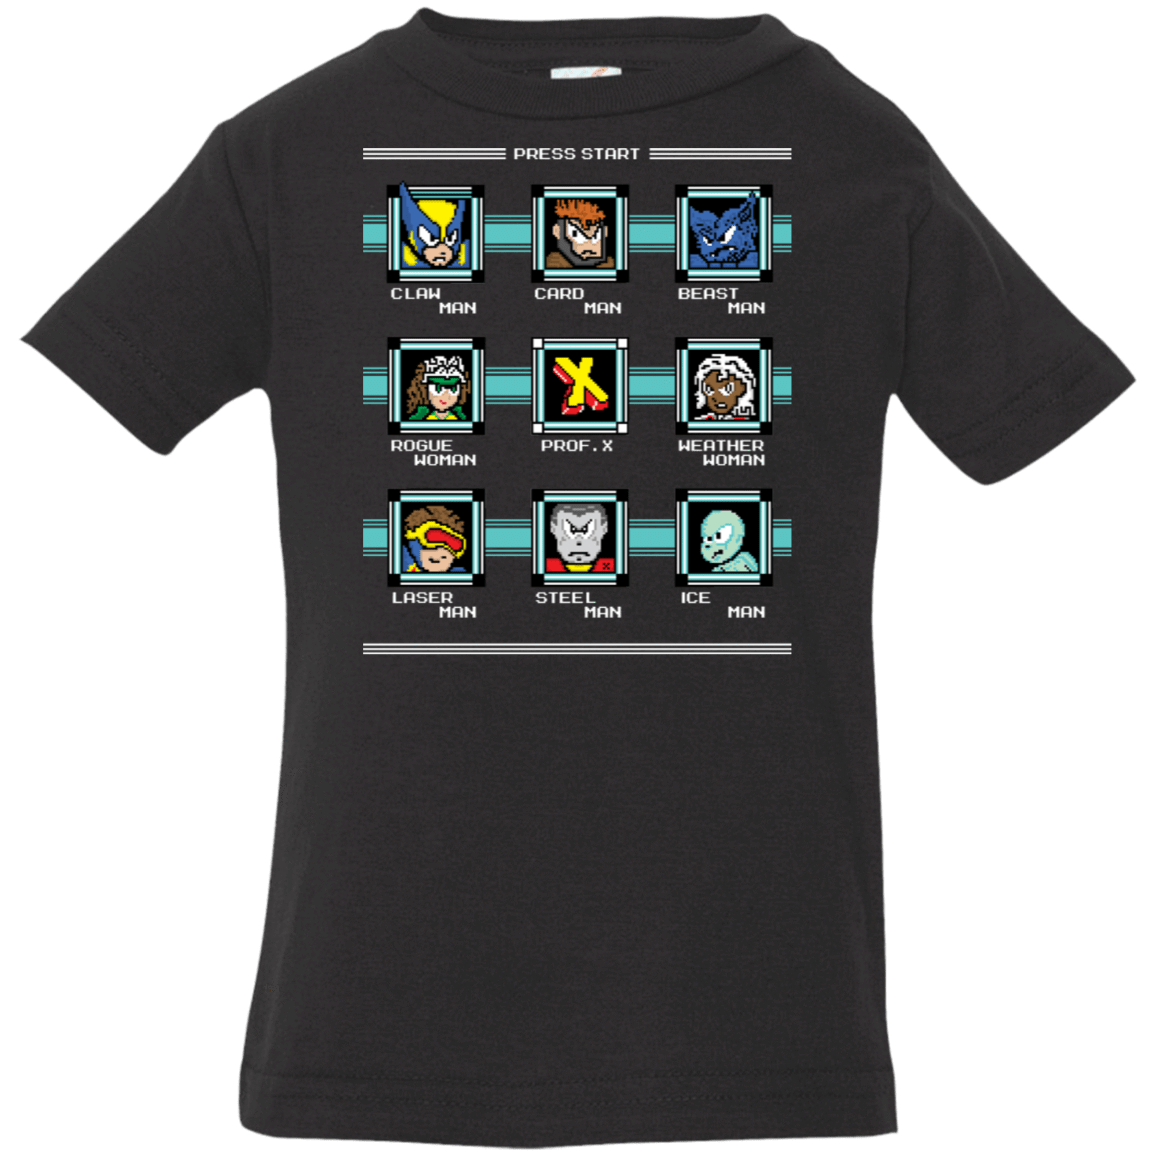 T-Shirts Black / 6 Months Mega X-Man Infant Premium T-Shirt